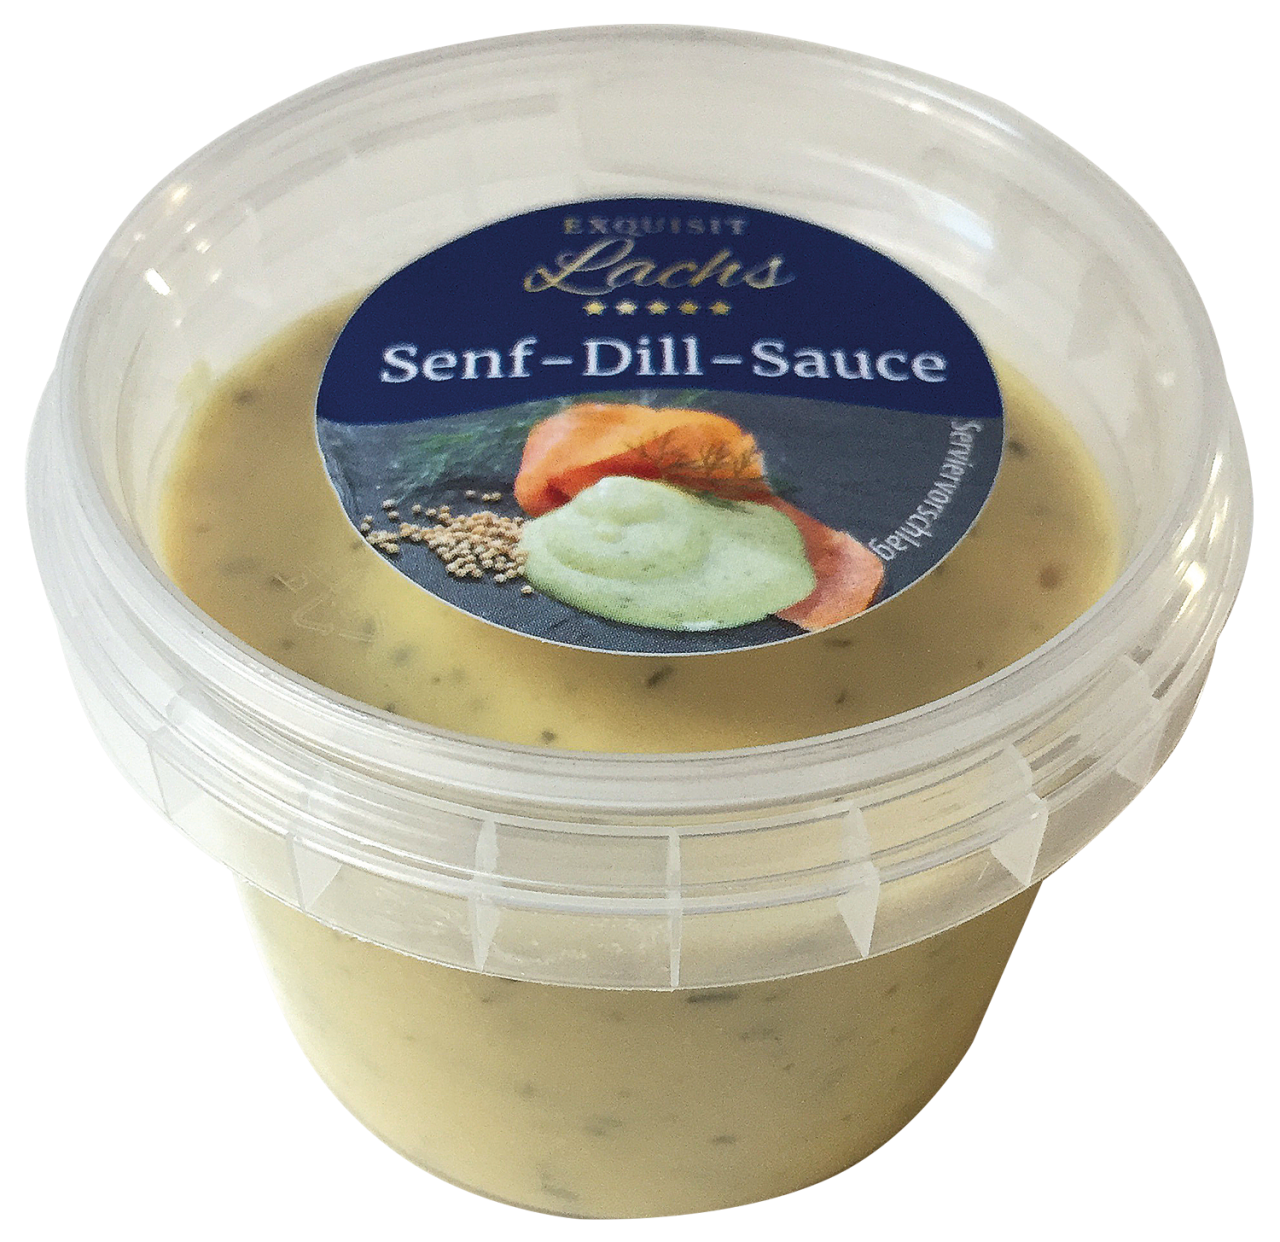 Exquisit Senf-Dill-Sauce von Exquisit